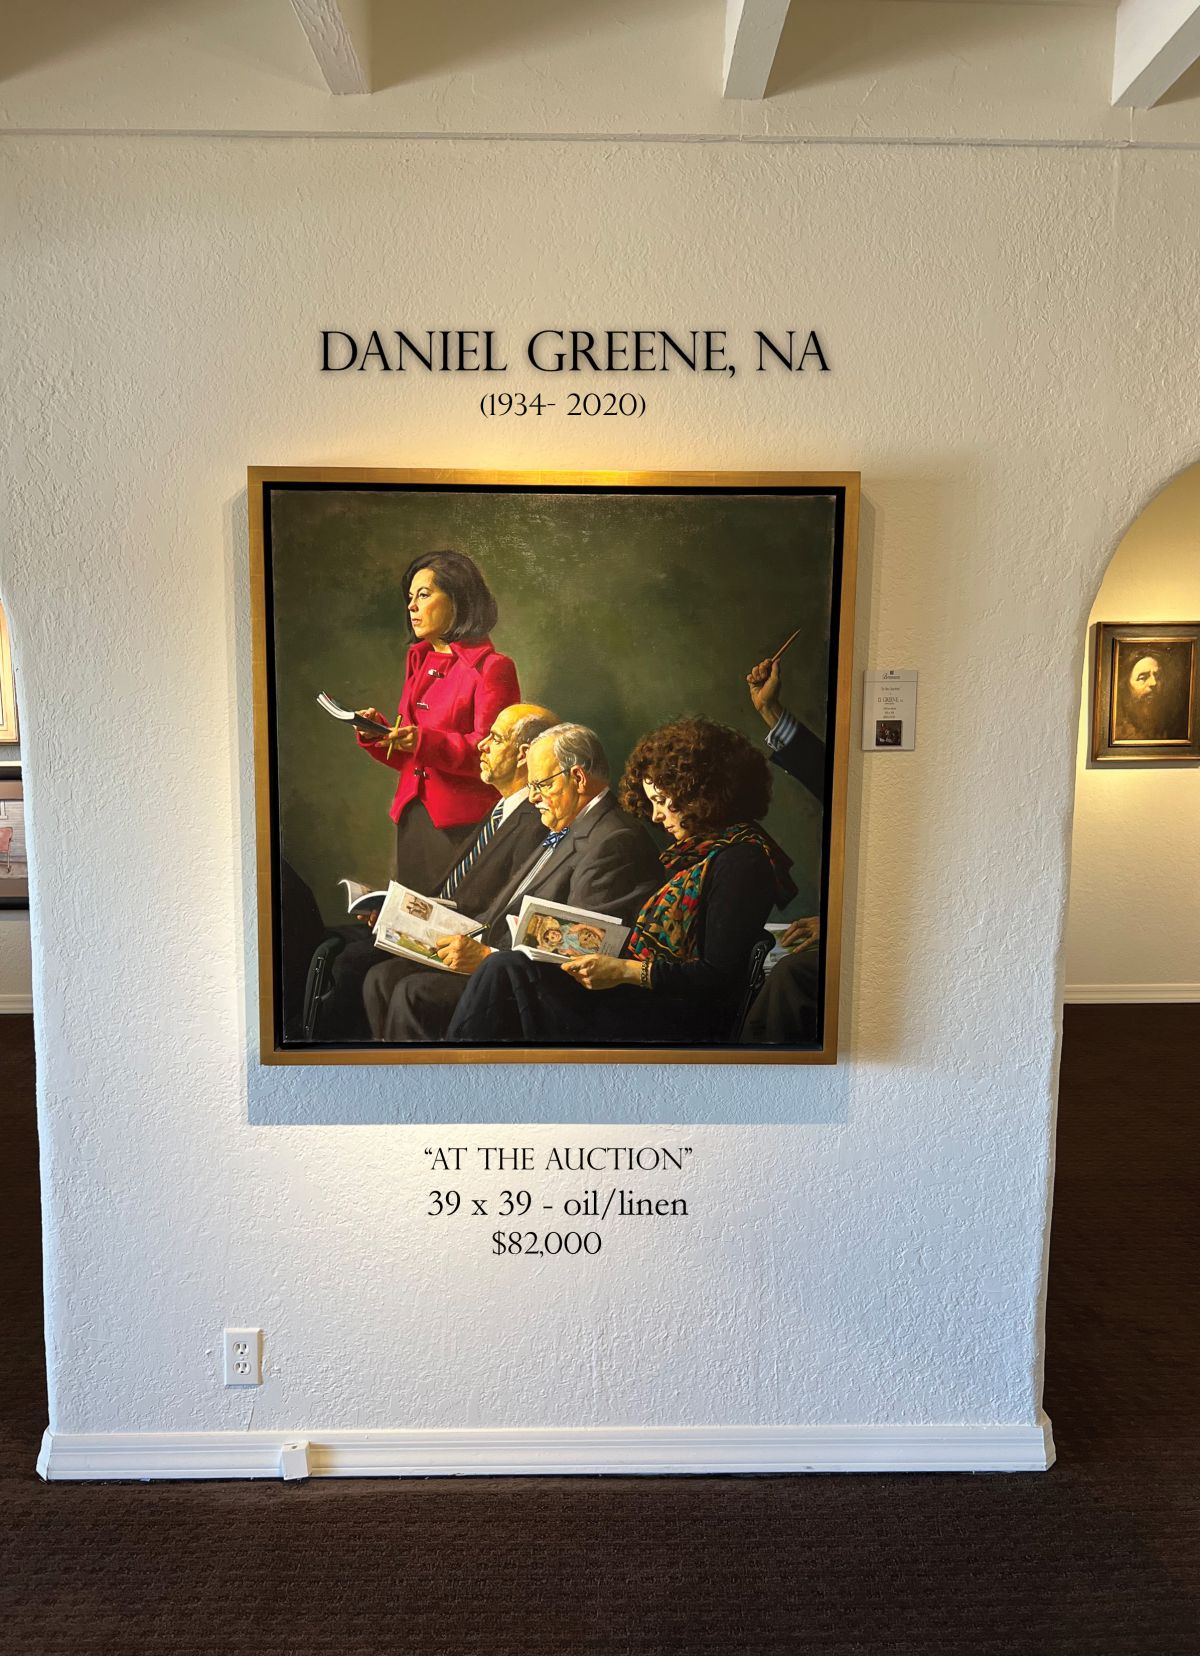 Daniel E. Greene, NA (1934-2020)